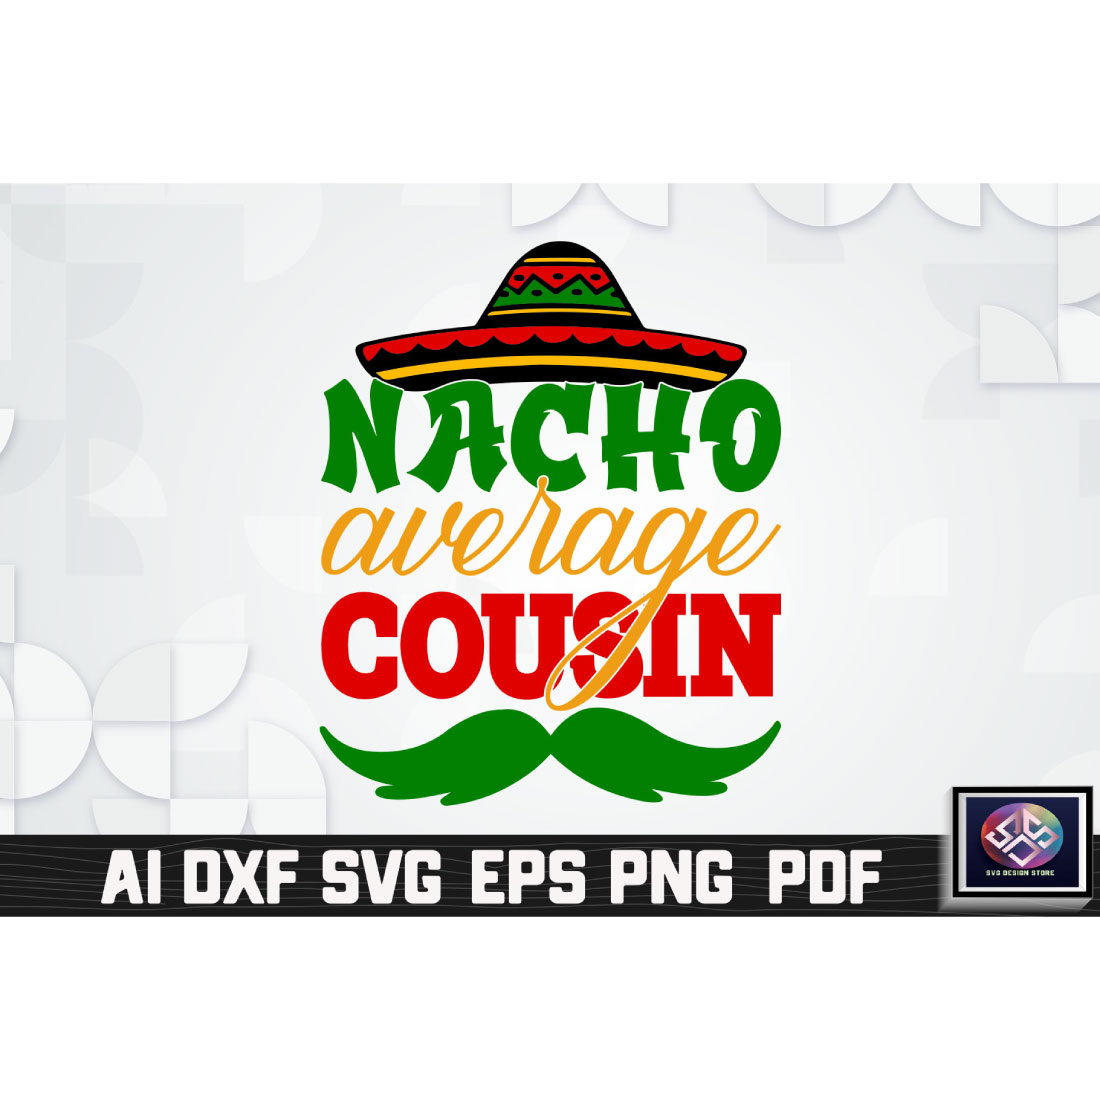 Nacho Average Cousin cover image.